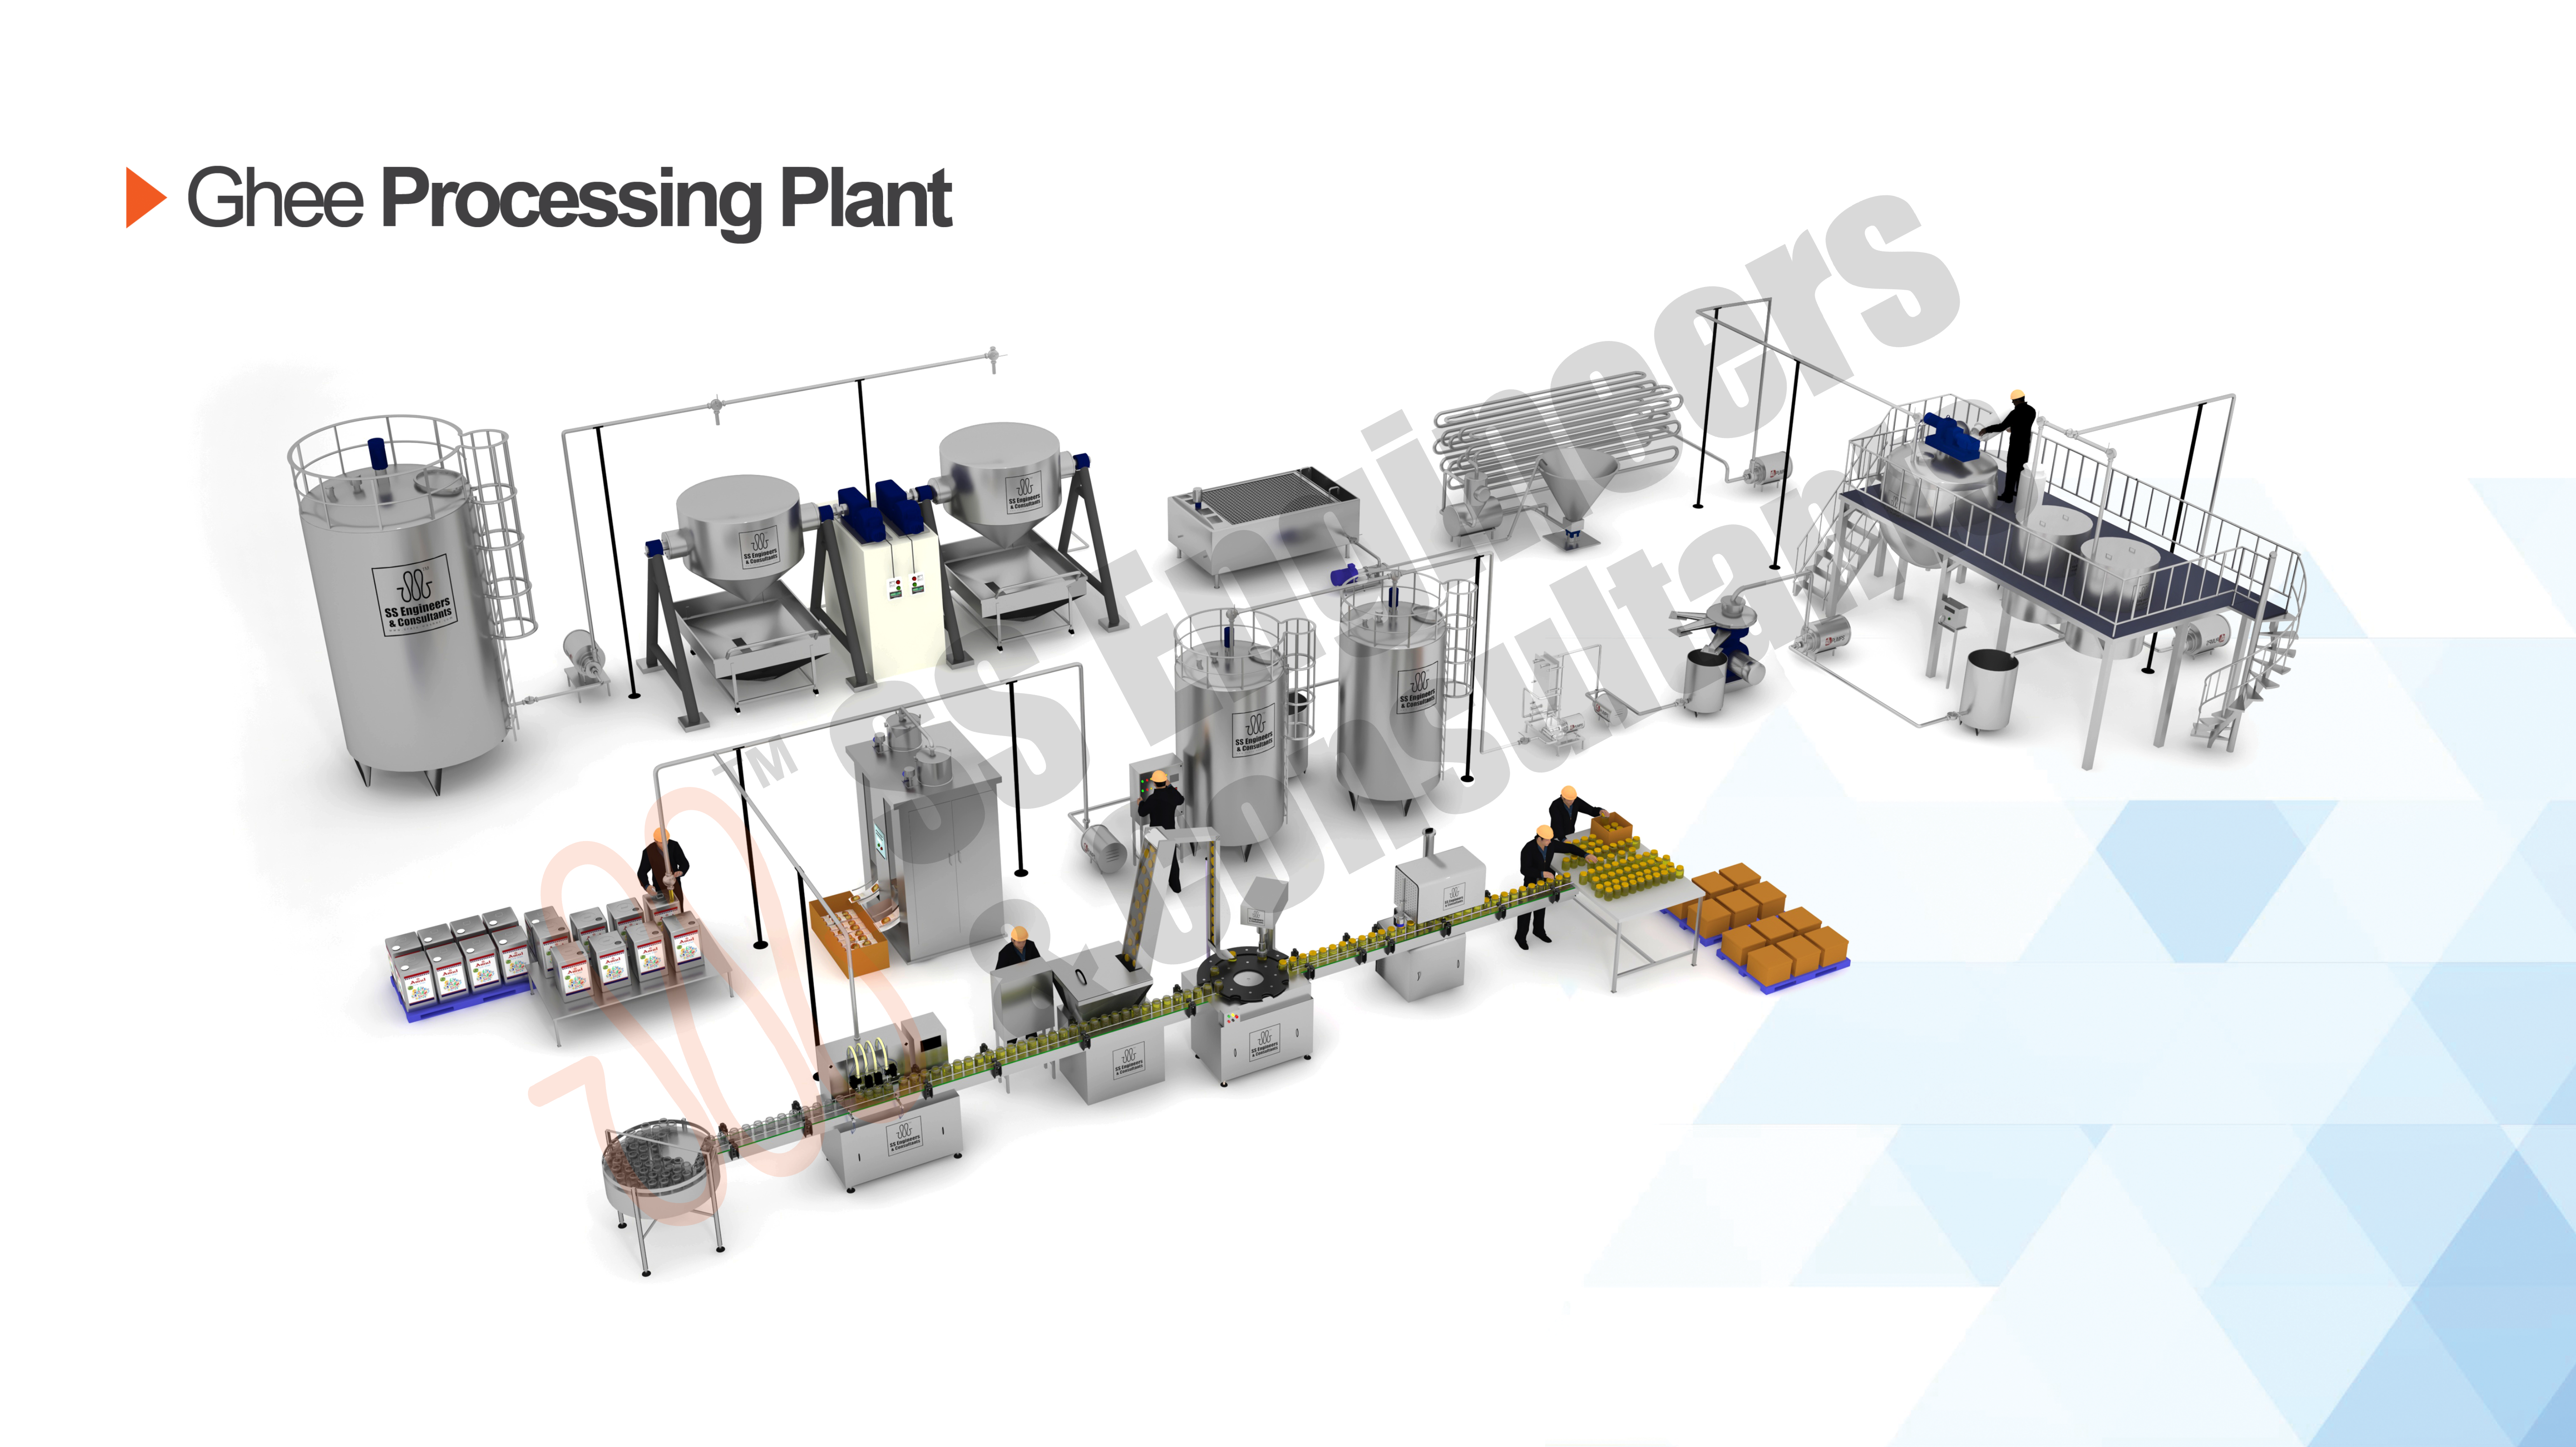 Ghee processing plant